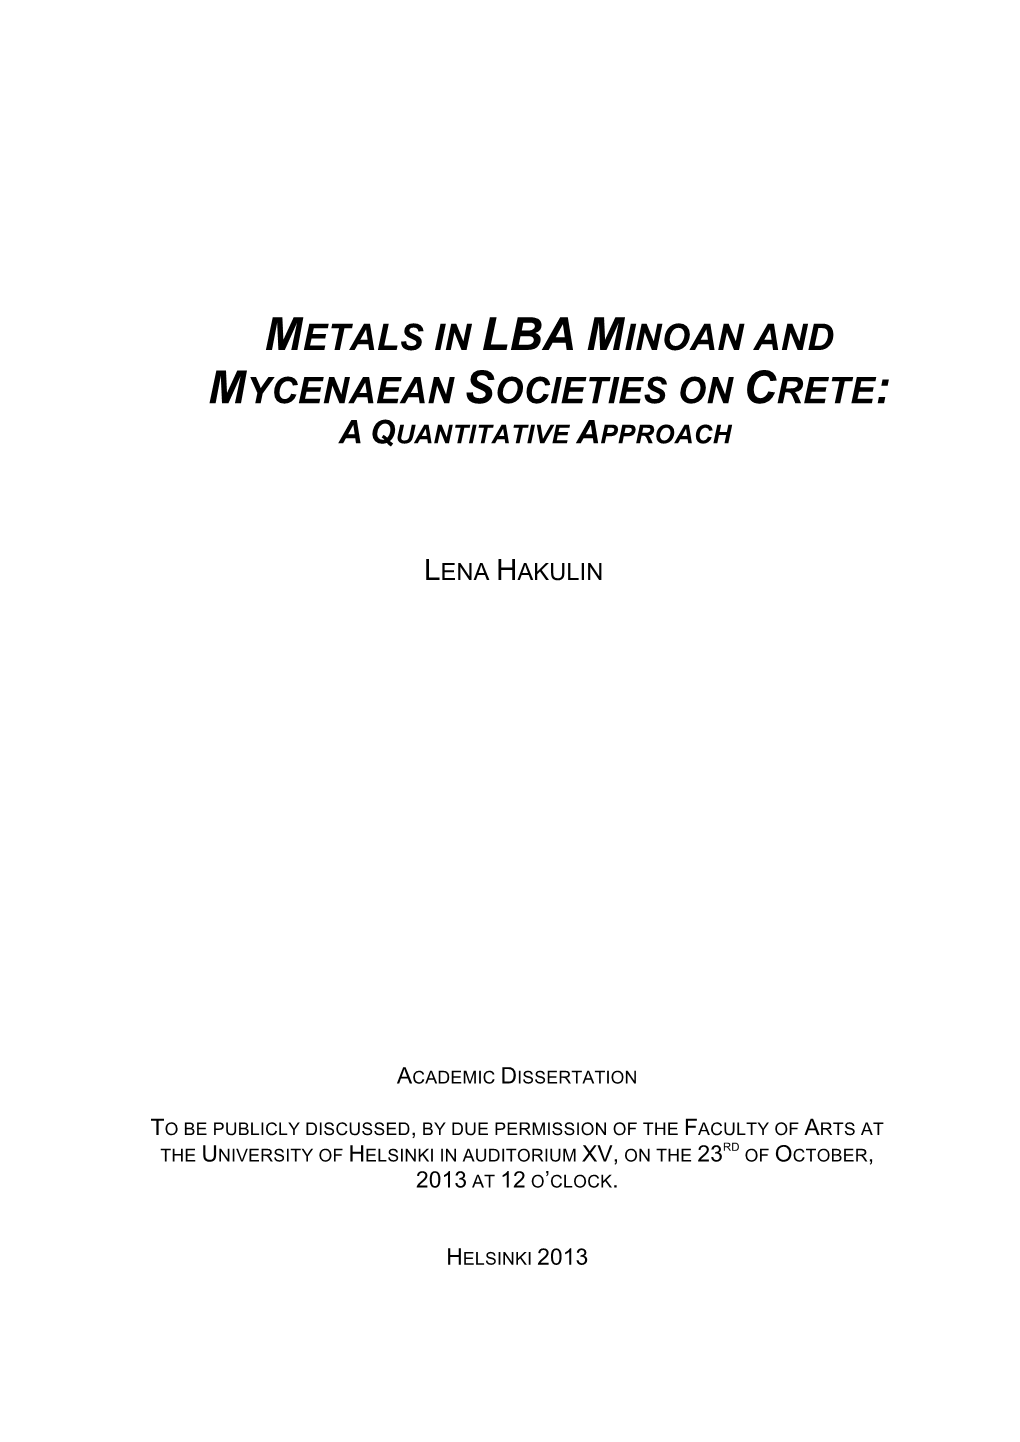 Metals in Lba Minoan and Mycenaean Societies on Crete: a Quantitative Approach